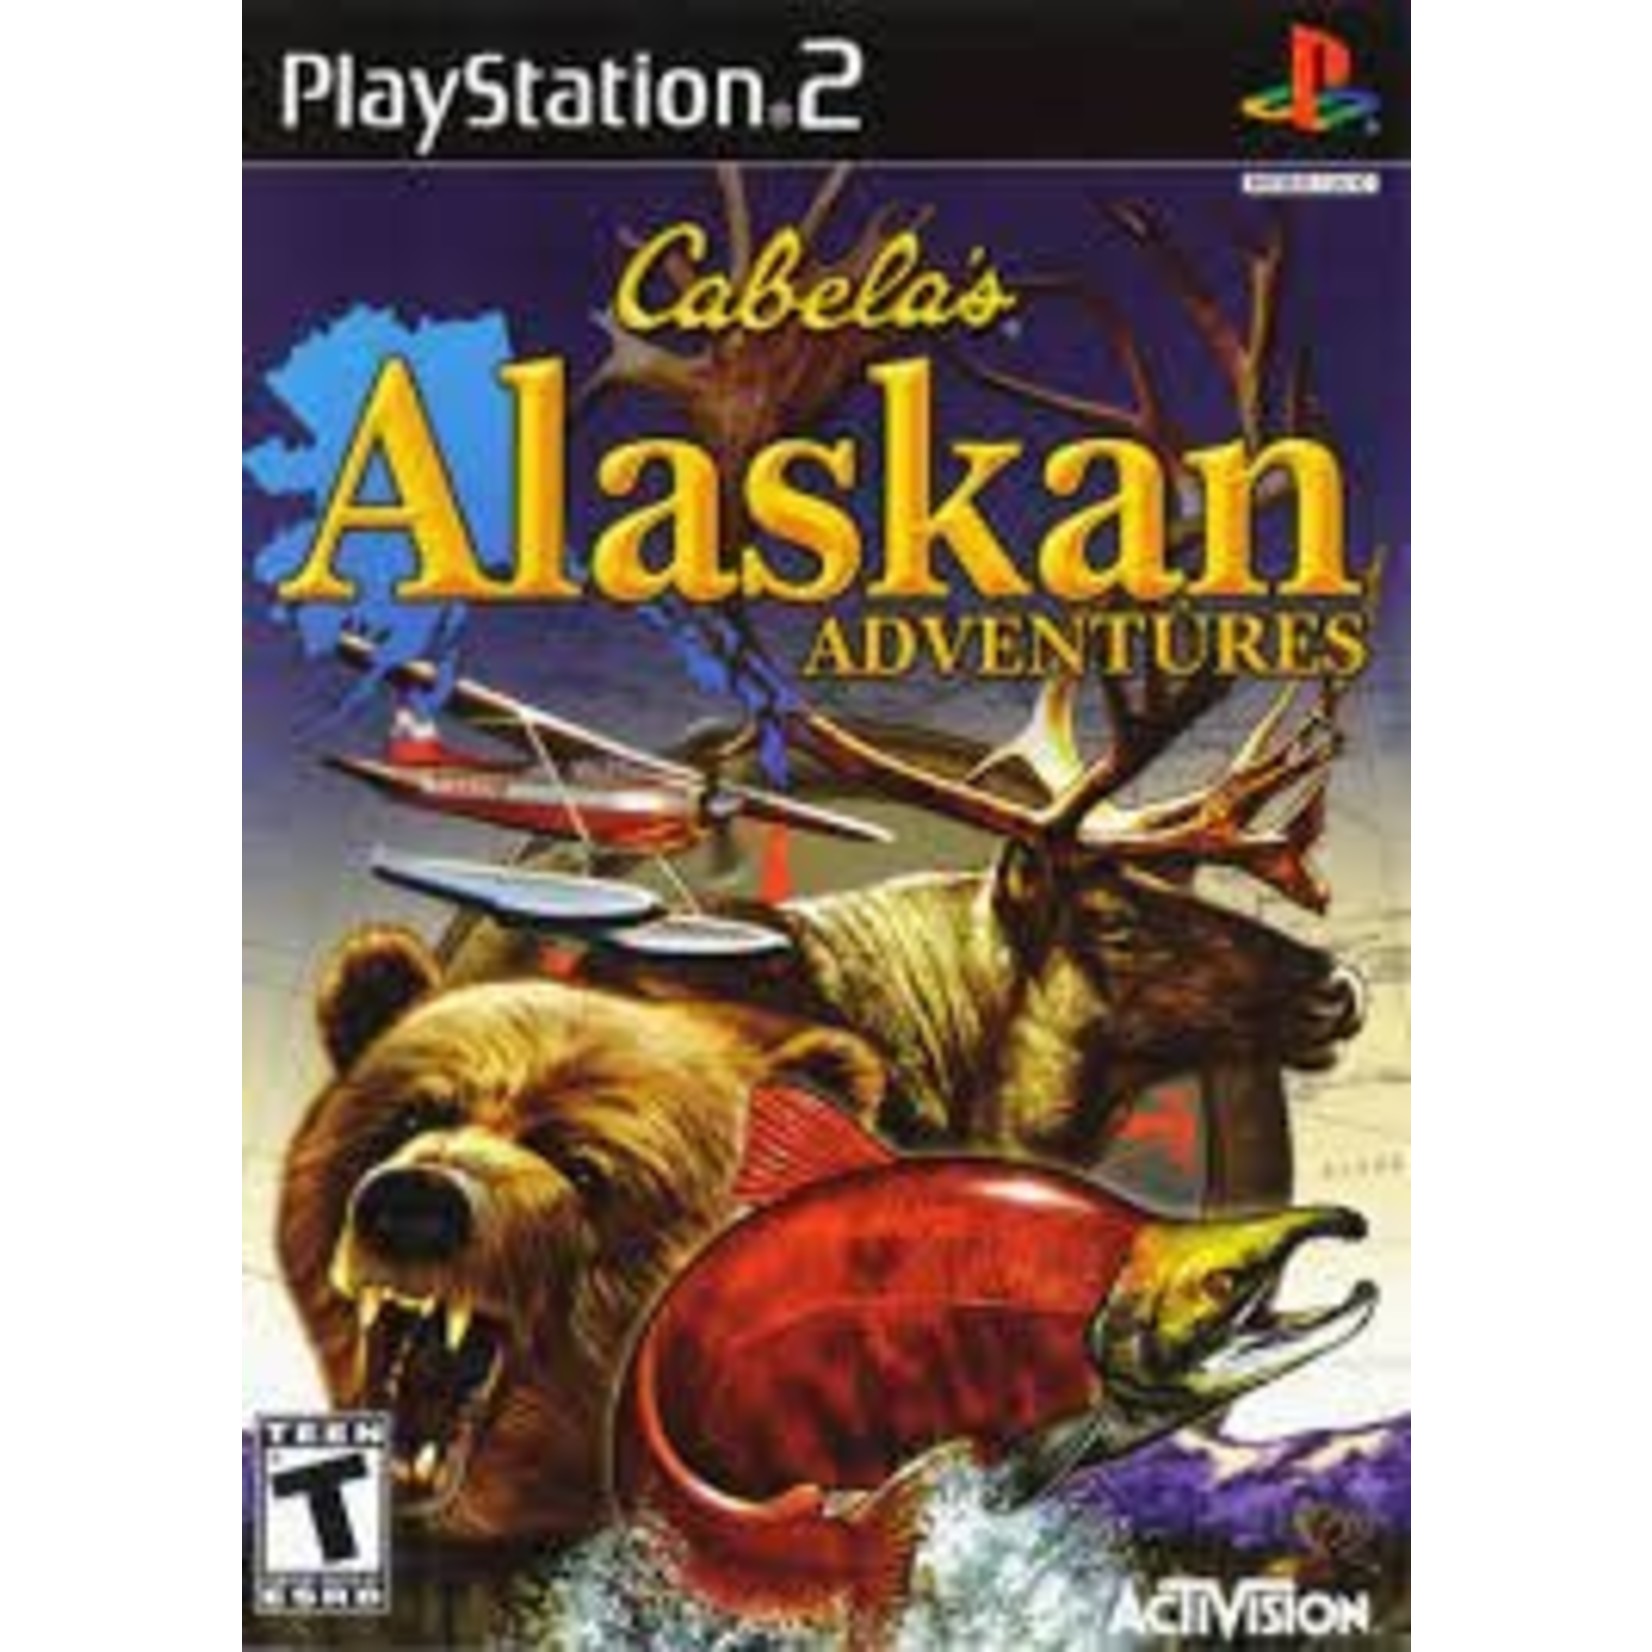 PS2U-Cabela's Alaskan Adventures